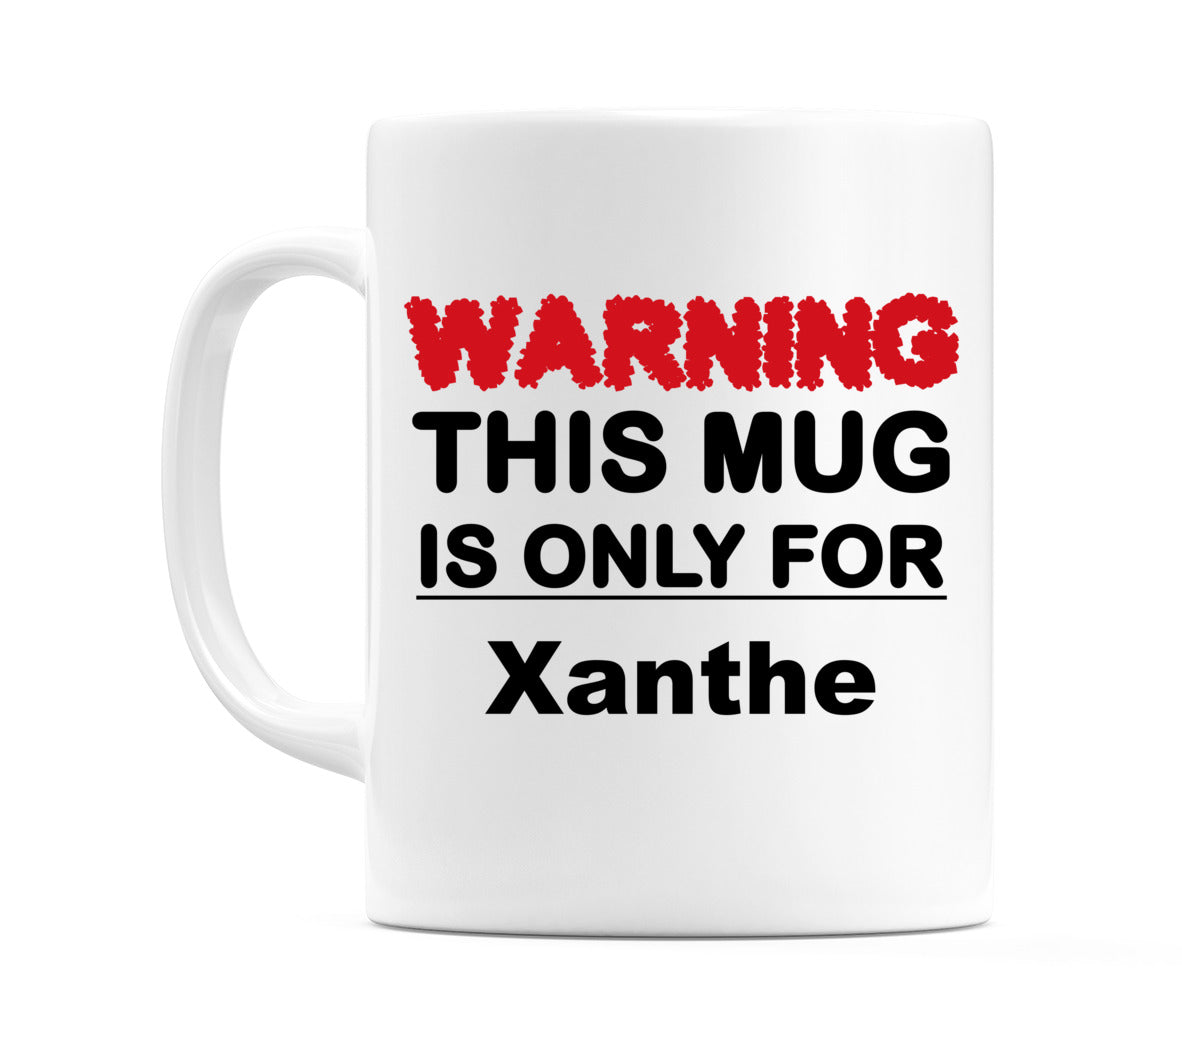 Warning This Mug is ONLY for Xanthe Mug